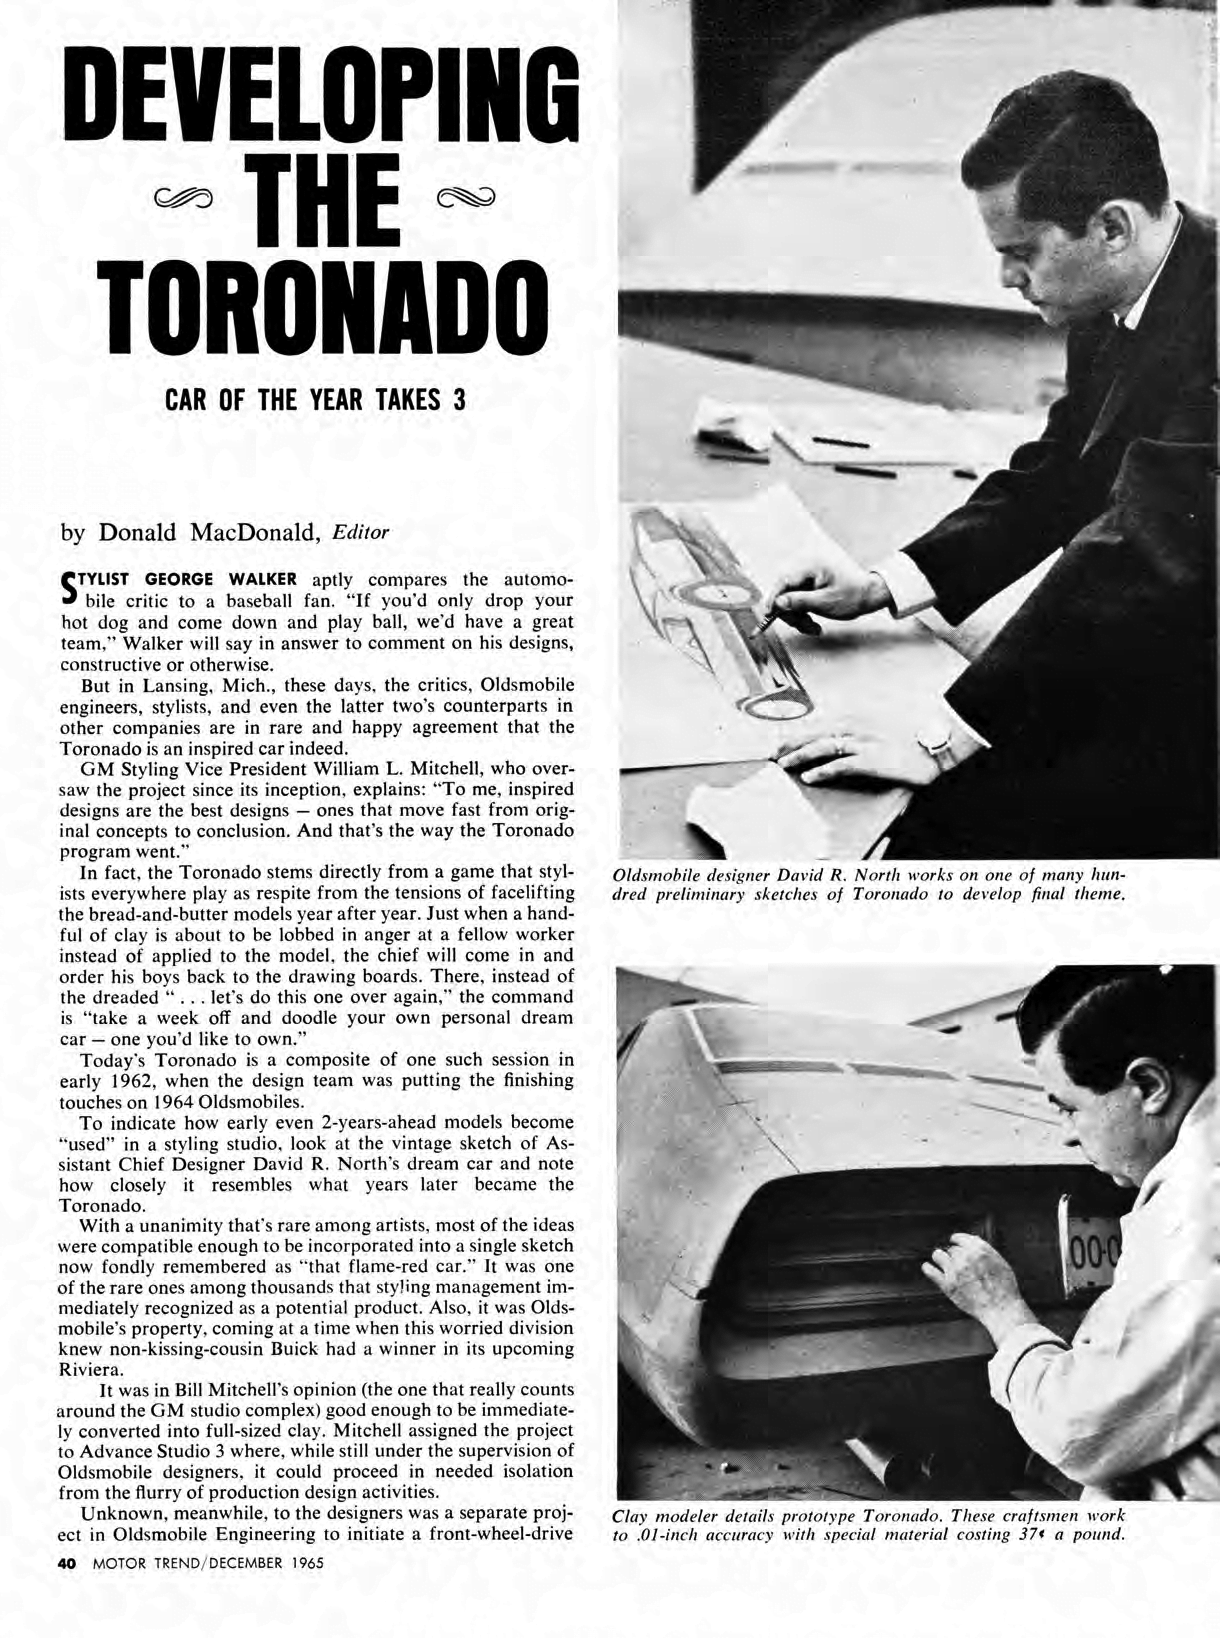 MT December 1965 - Developing the Toronado